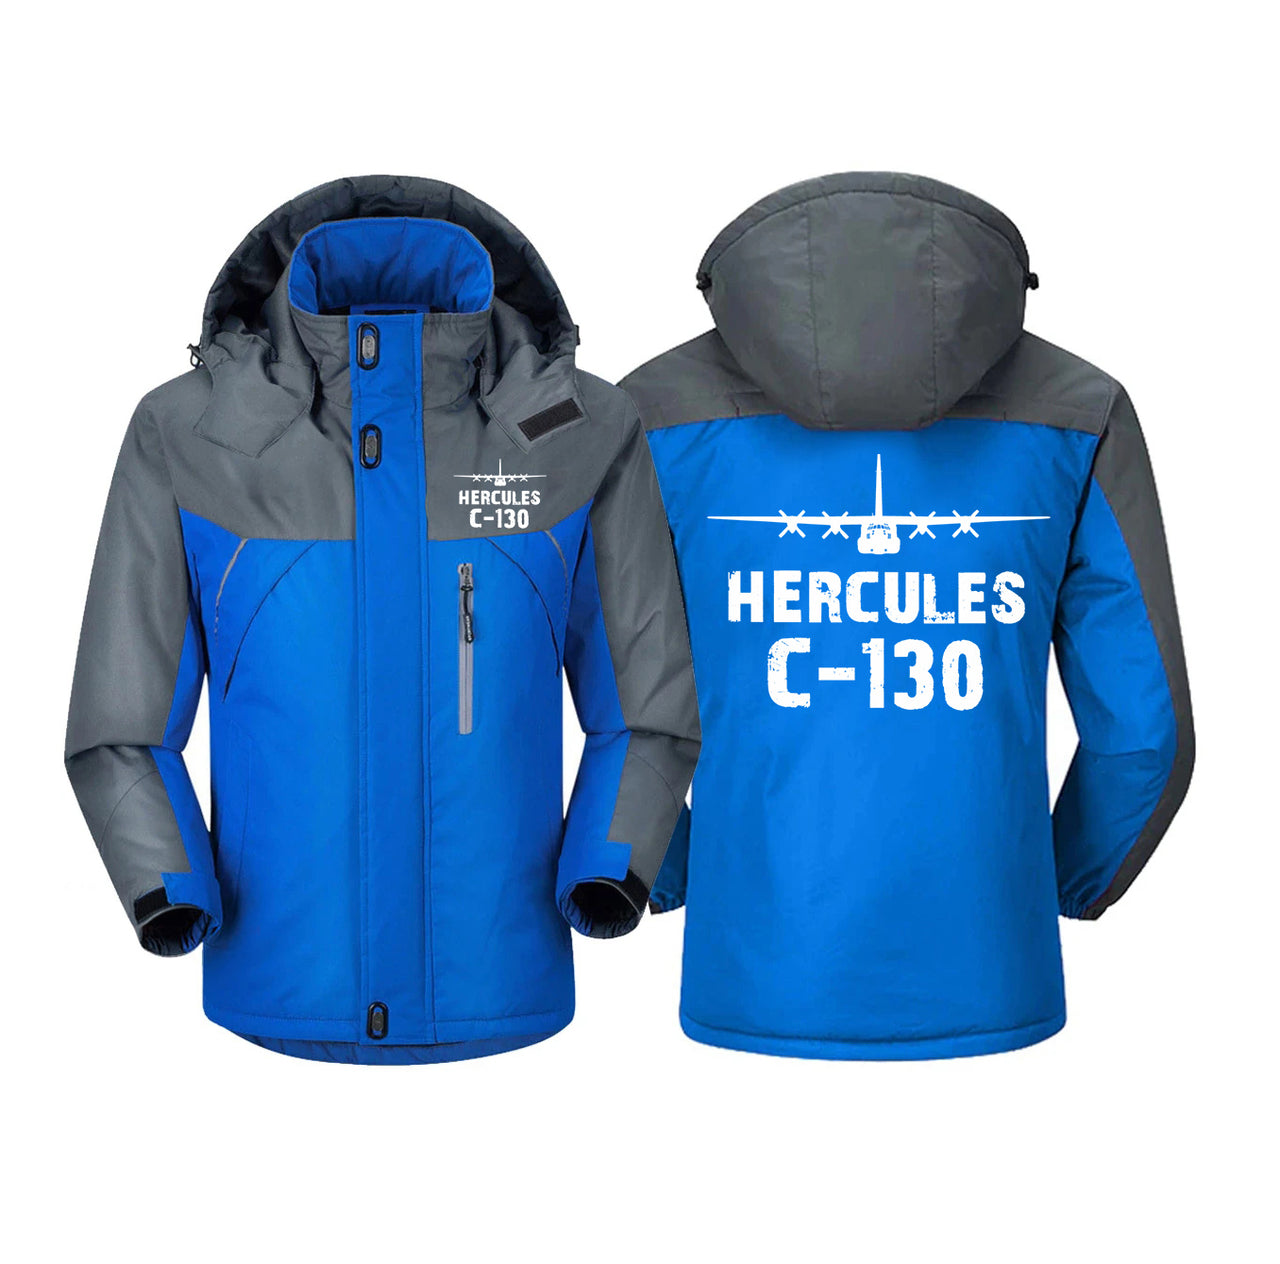 Hercules C-130 & Plane Designed Thick Winter Jackets